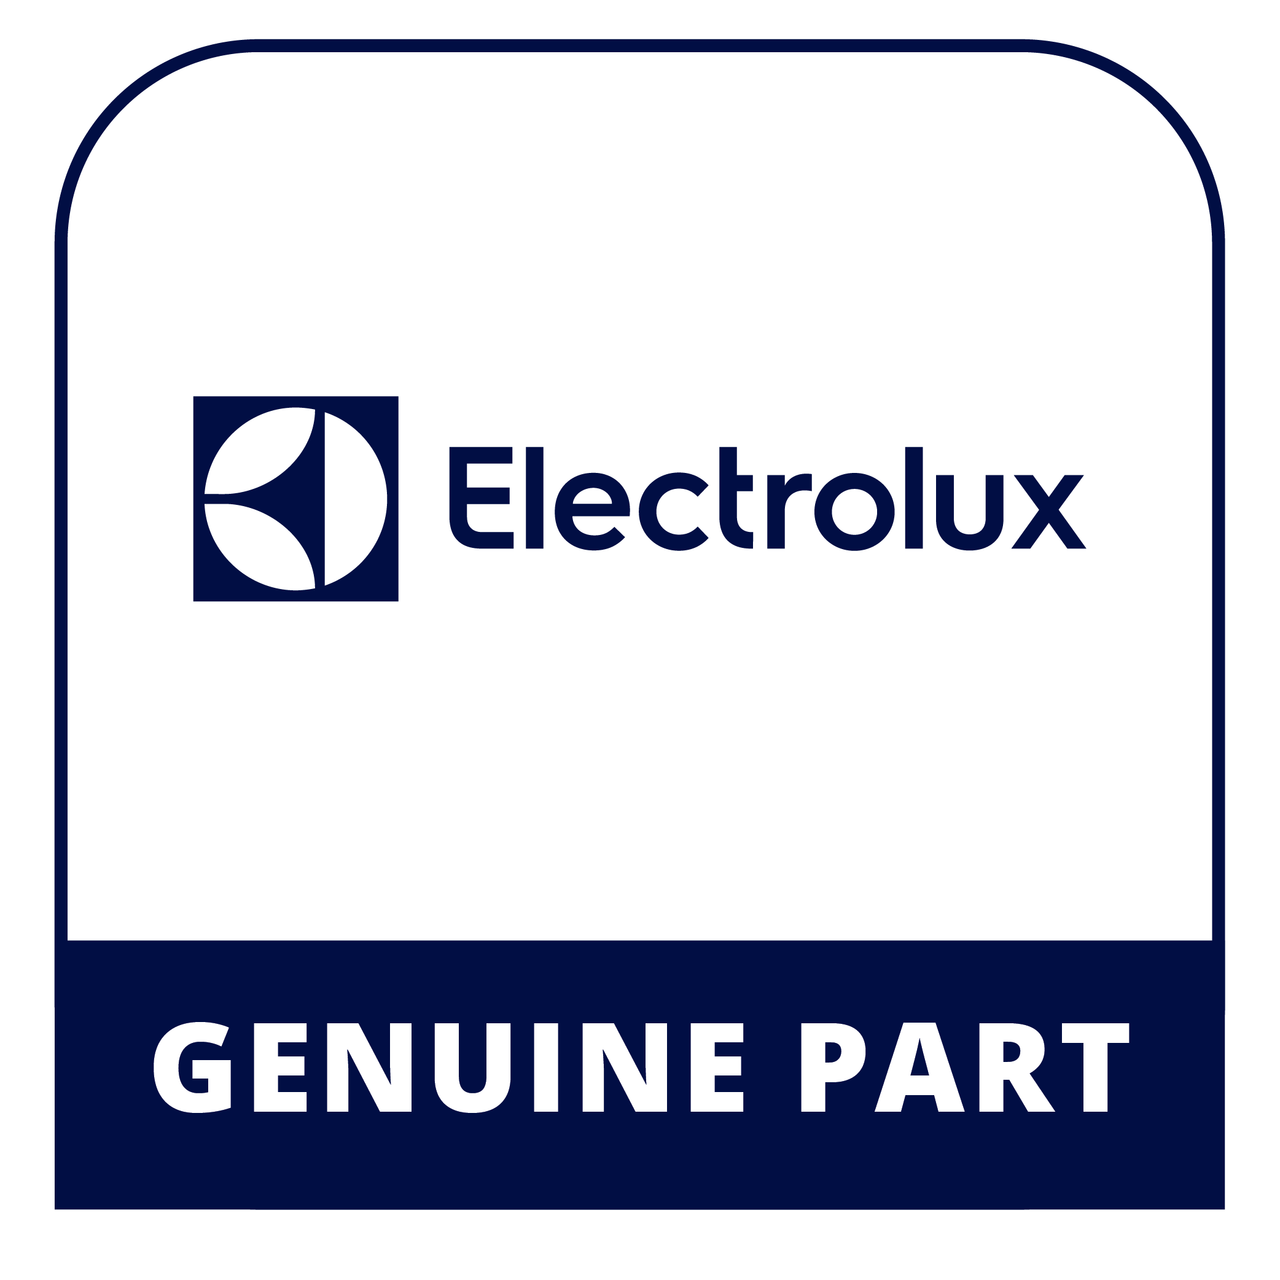 Frigidaire - Electrolux 316518030 Board - Genuine Electrolux Part